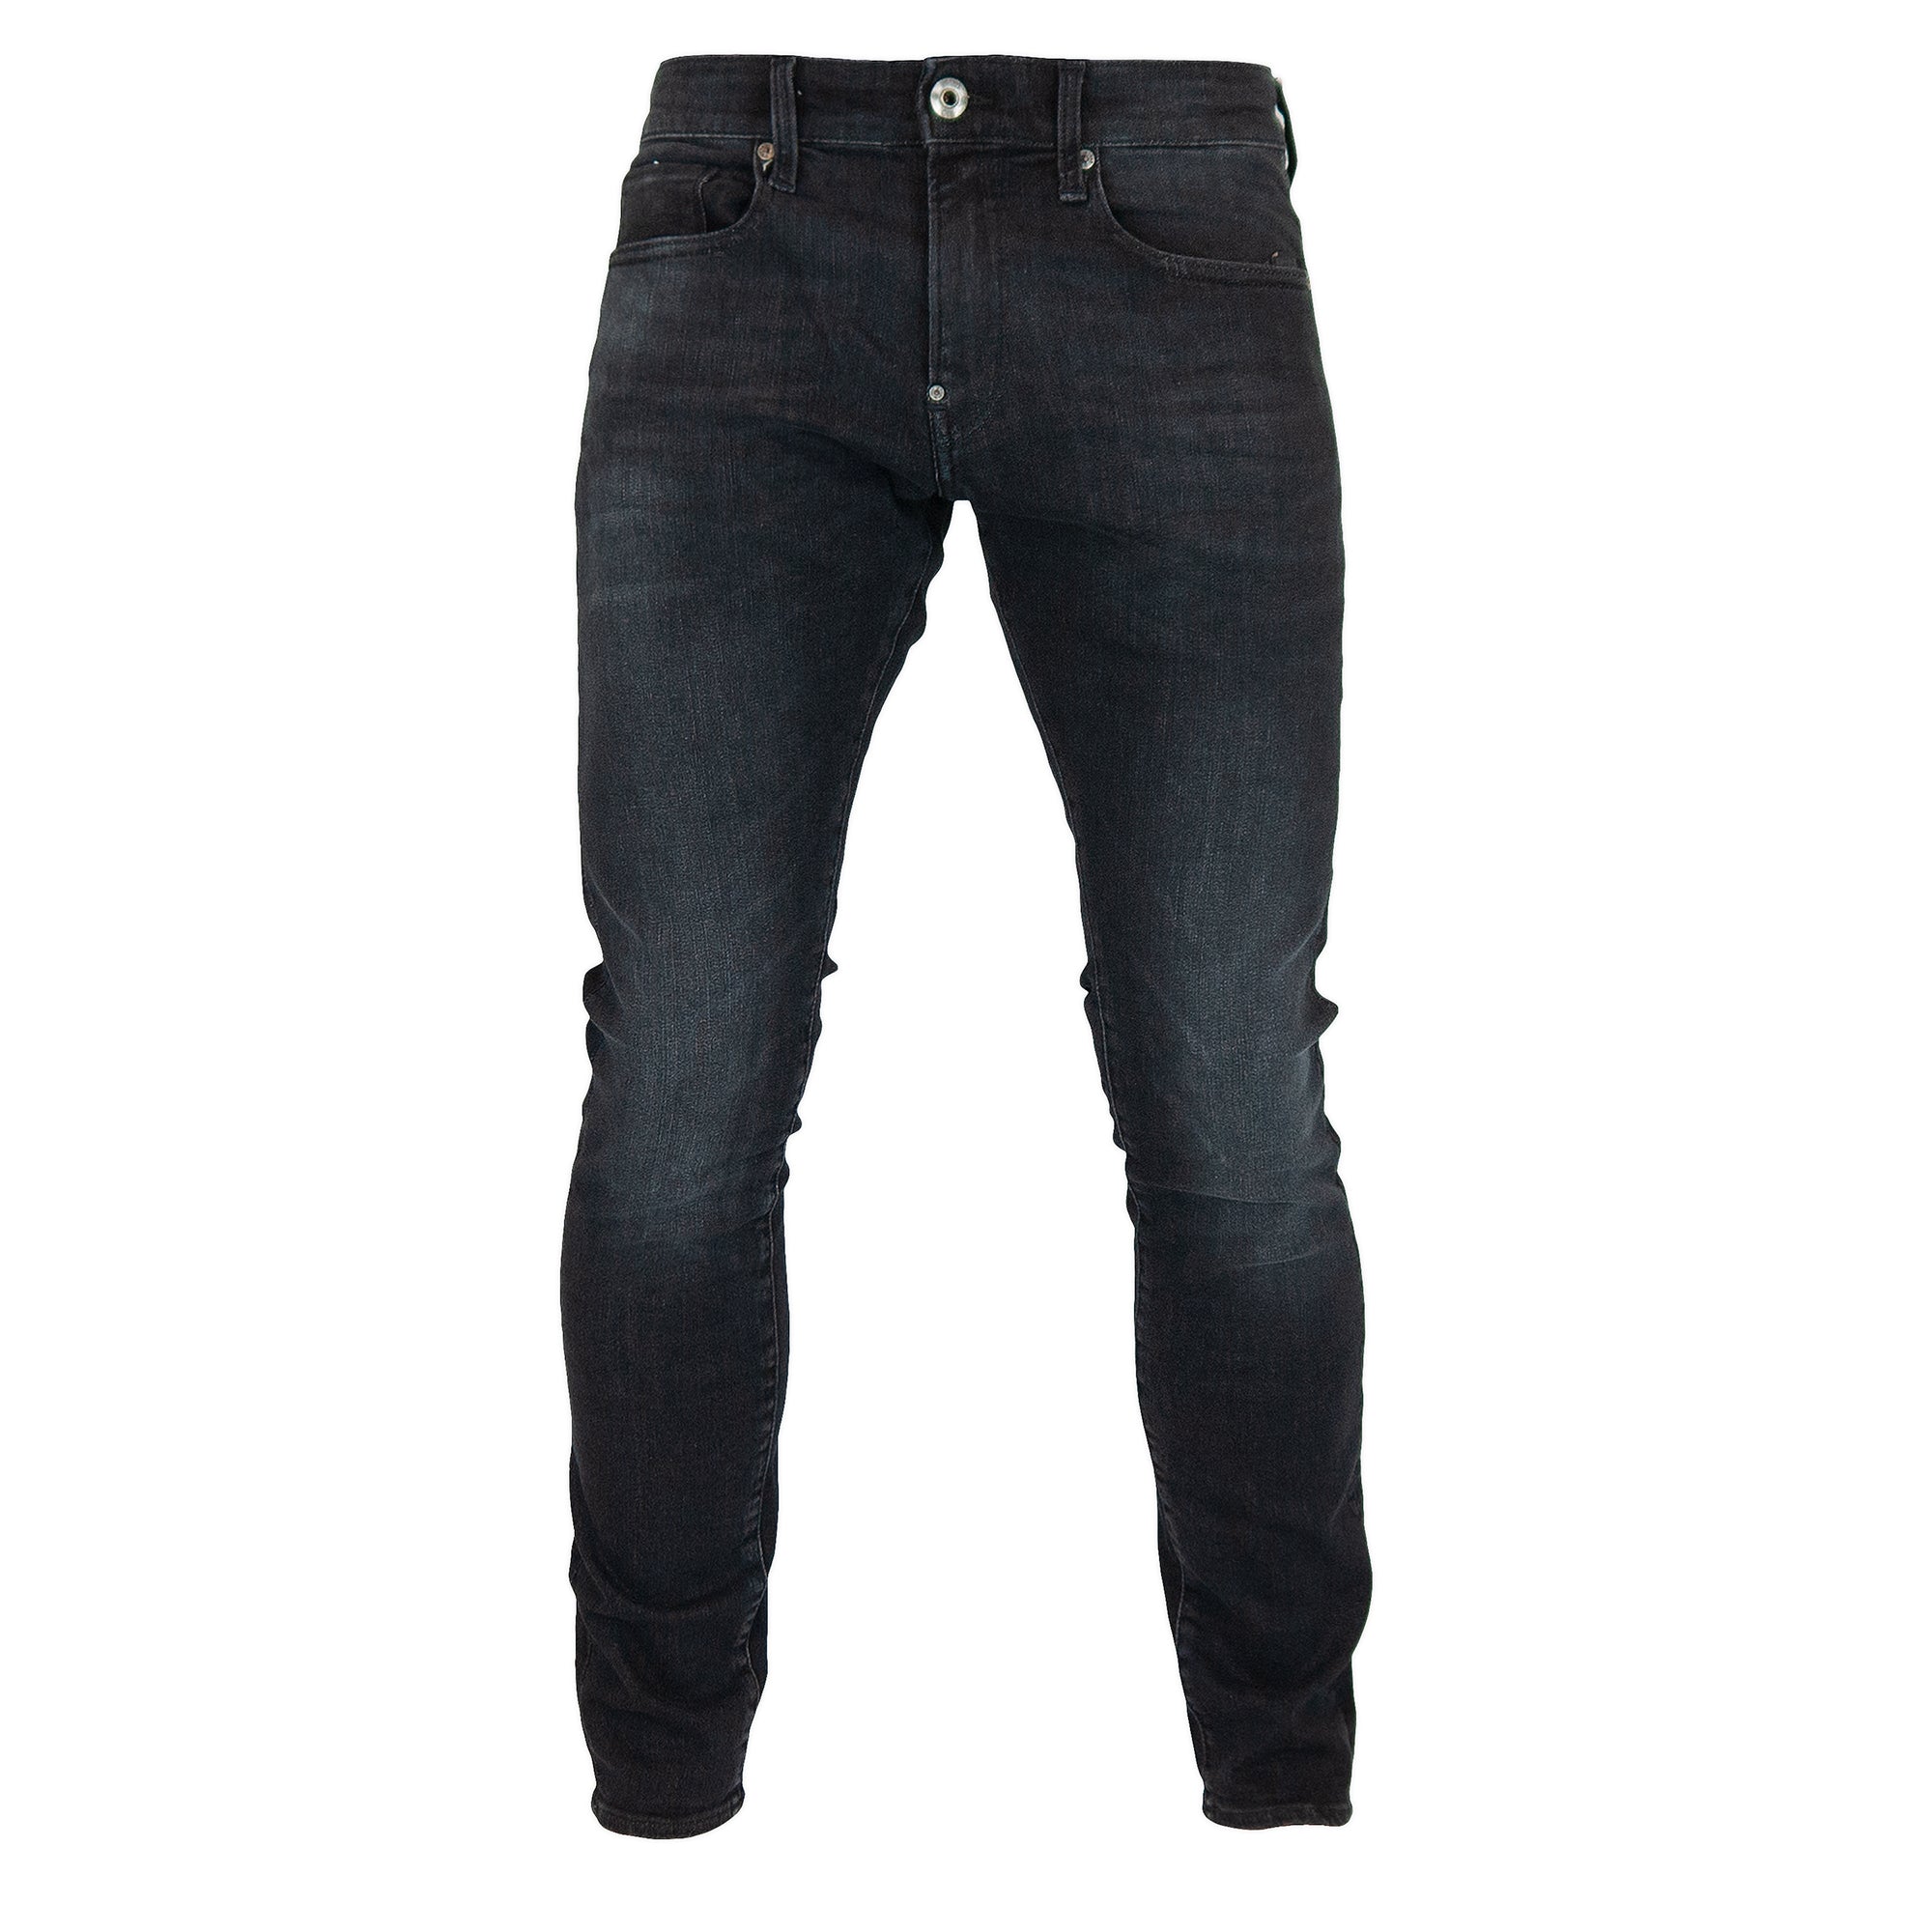 Bliksem hypothese Verlichten G-Star Revend Skinny Jeans - Elto Medium Aged Faded Black Superstretch